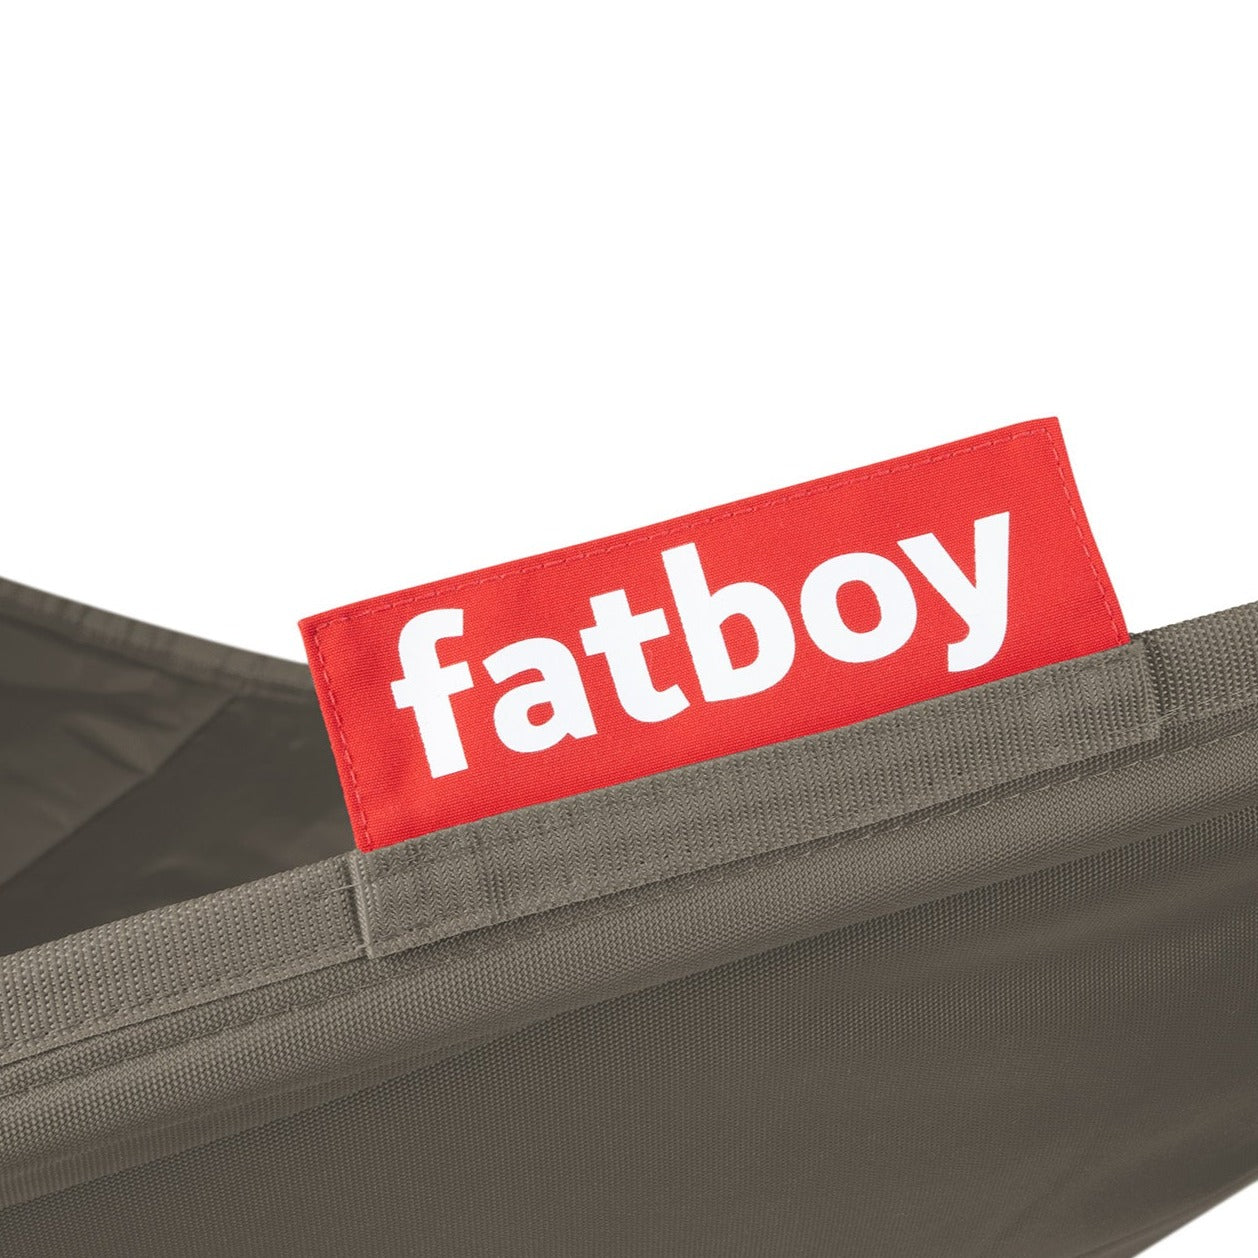 Fatboy Headdemock Superb Deluxe hamakas